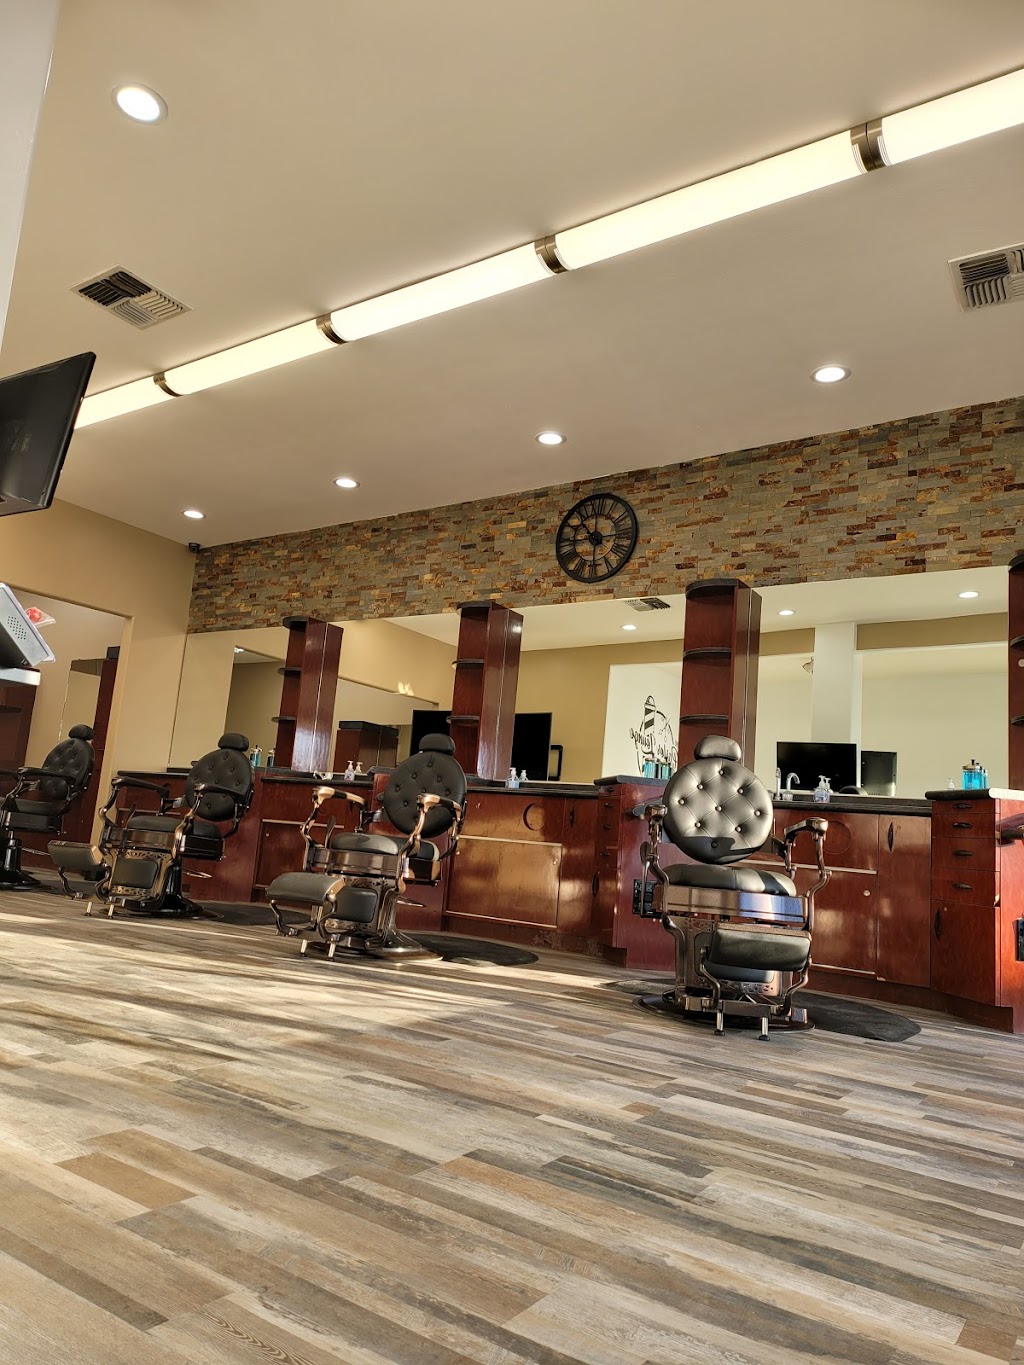 The Parlor Lounge Barber shop | 1738 E Meats Ave, Orange, CA 92865, USA | Phone: (714) 472-3017